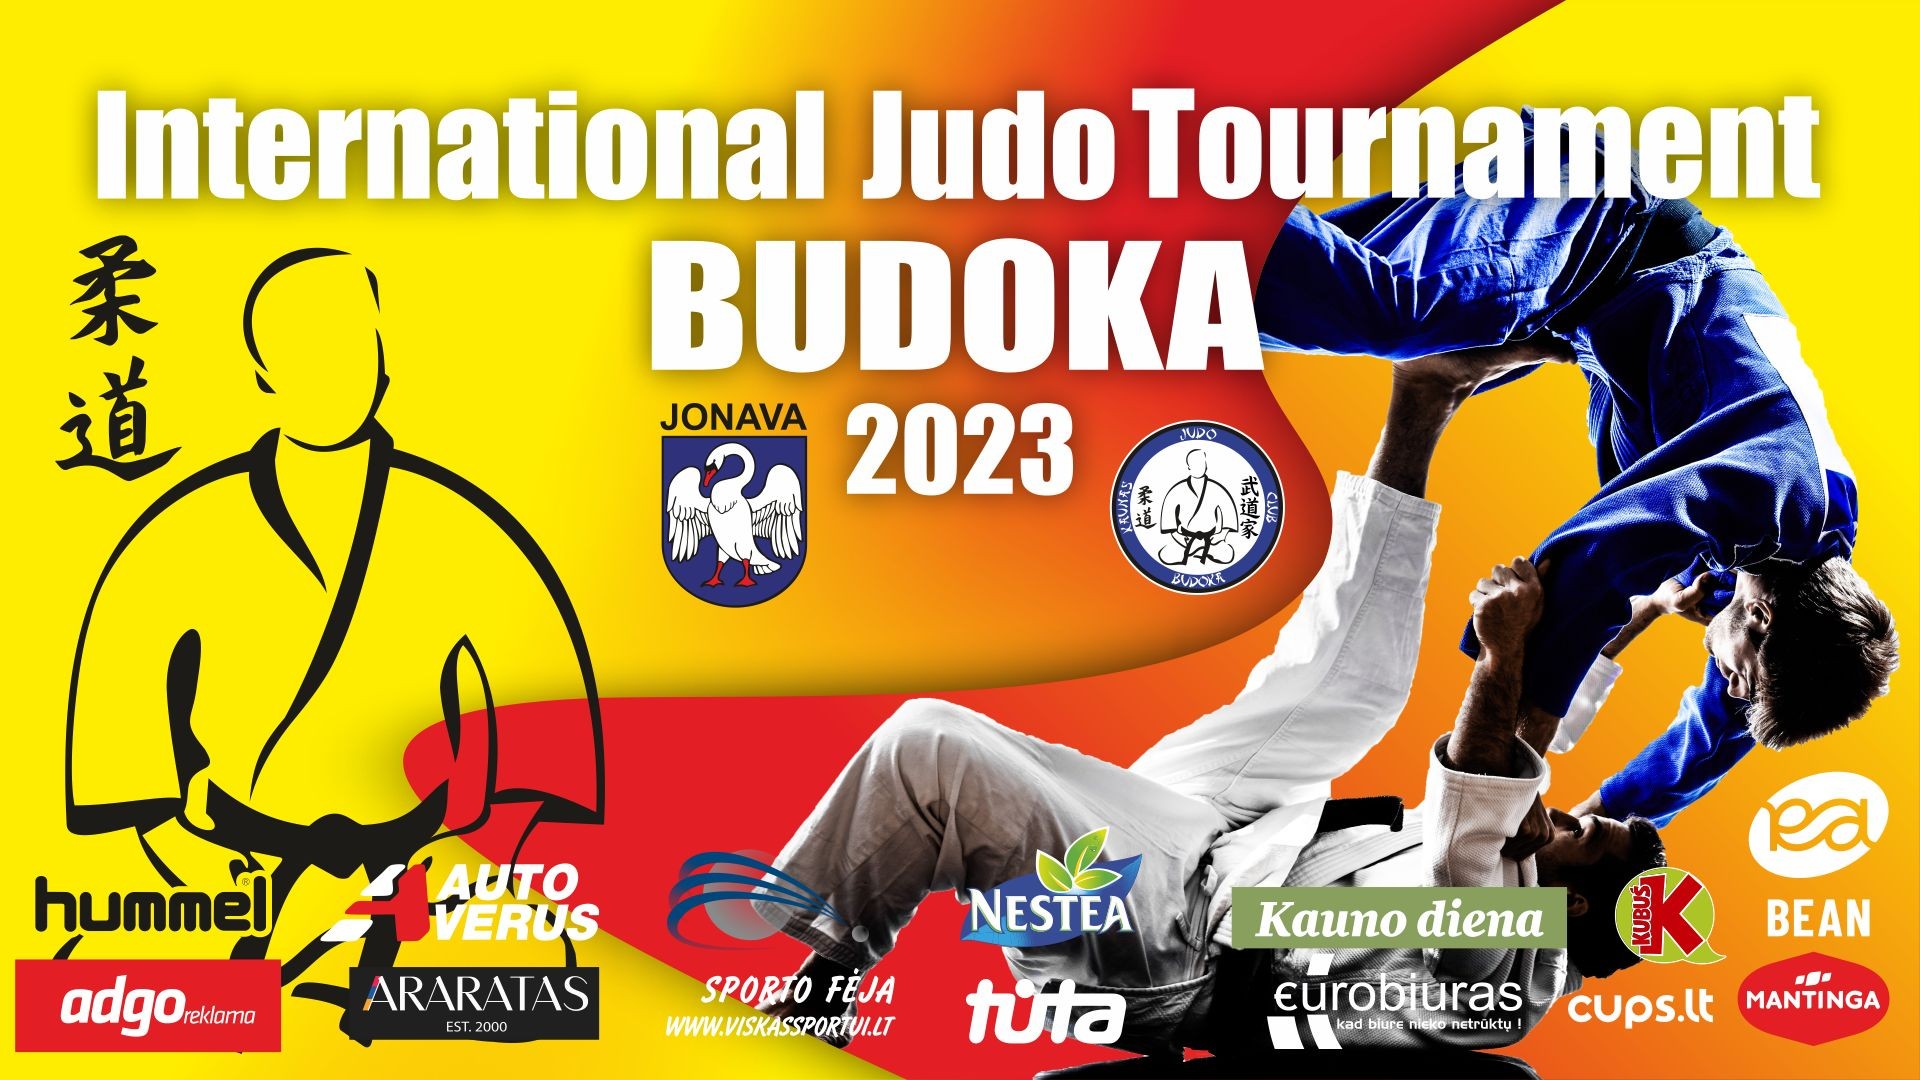 Tatami 6 - INTERNATIONAL JUDO CLUB BUDOKA TOURNAMENT 2023